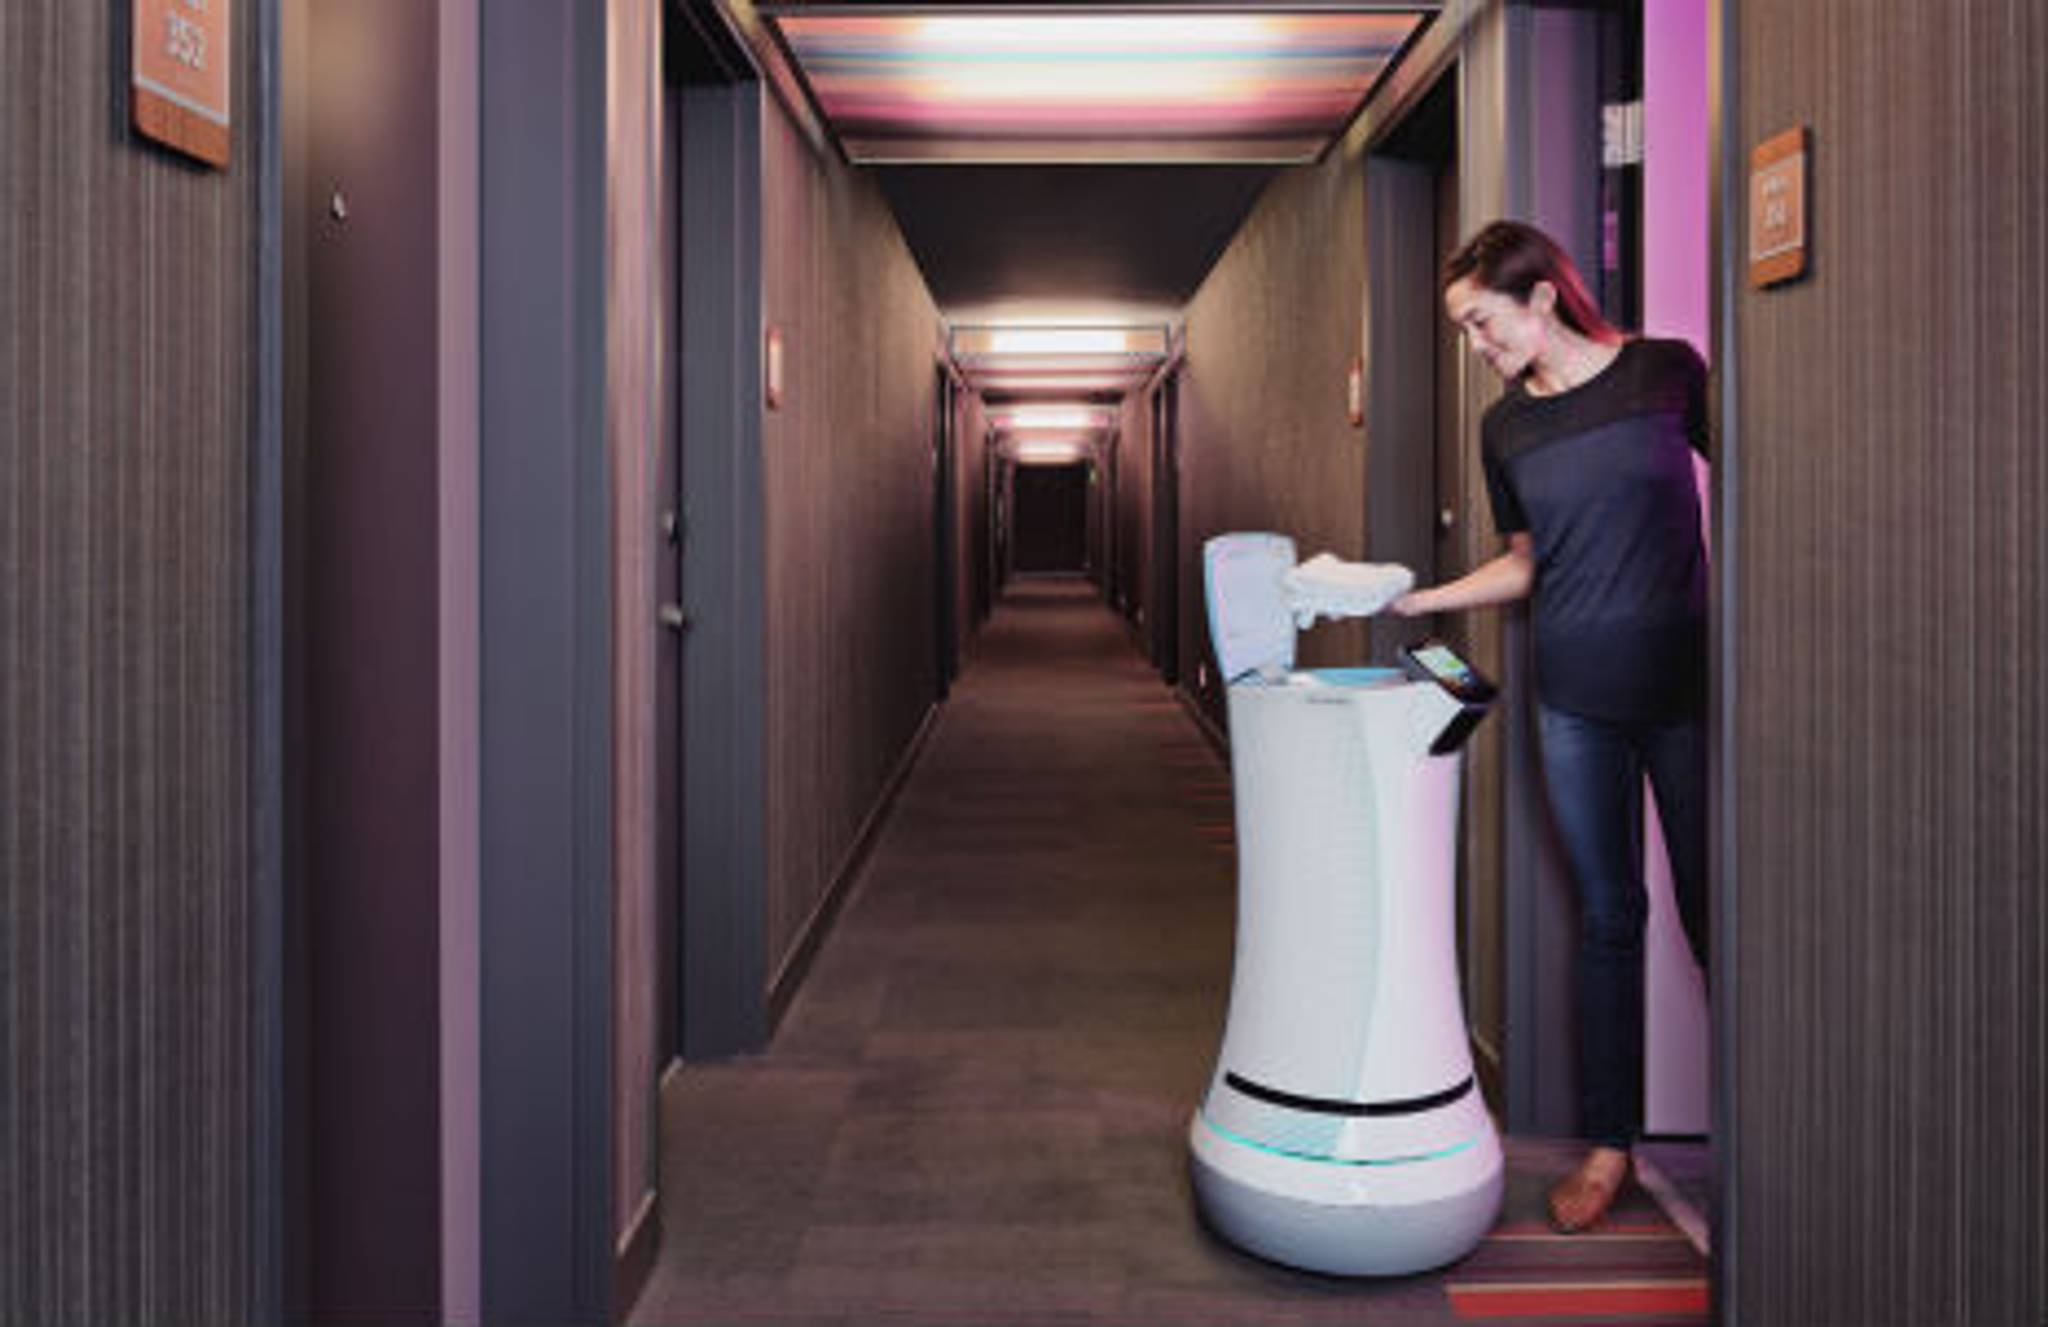 Get room service delivered by a robot